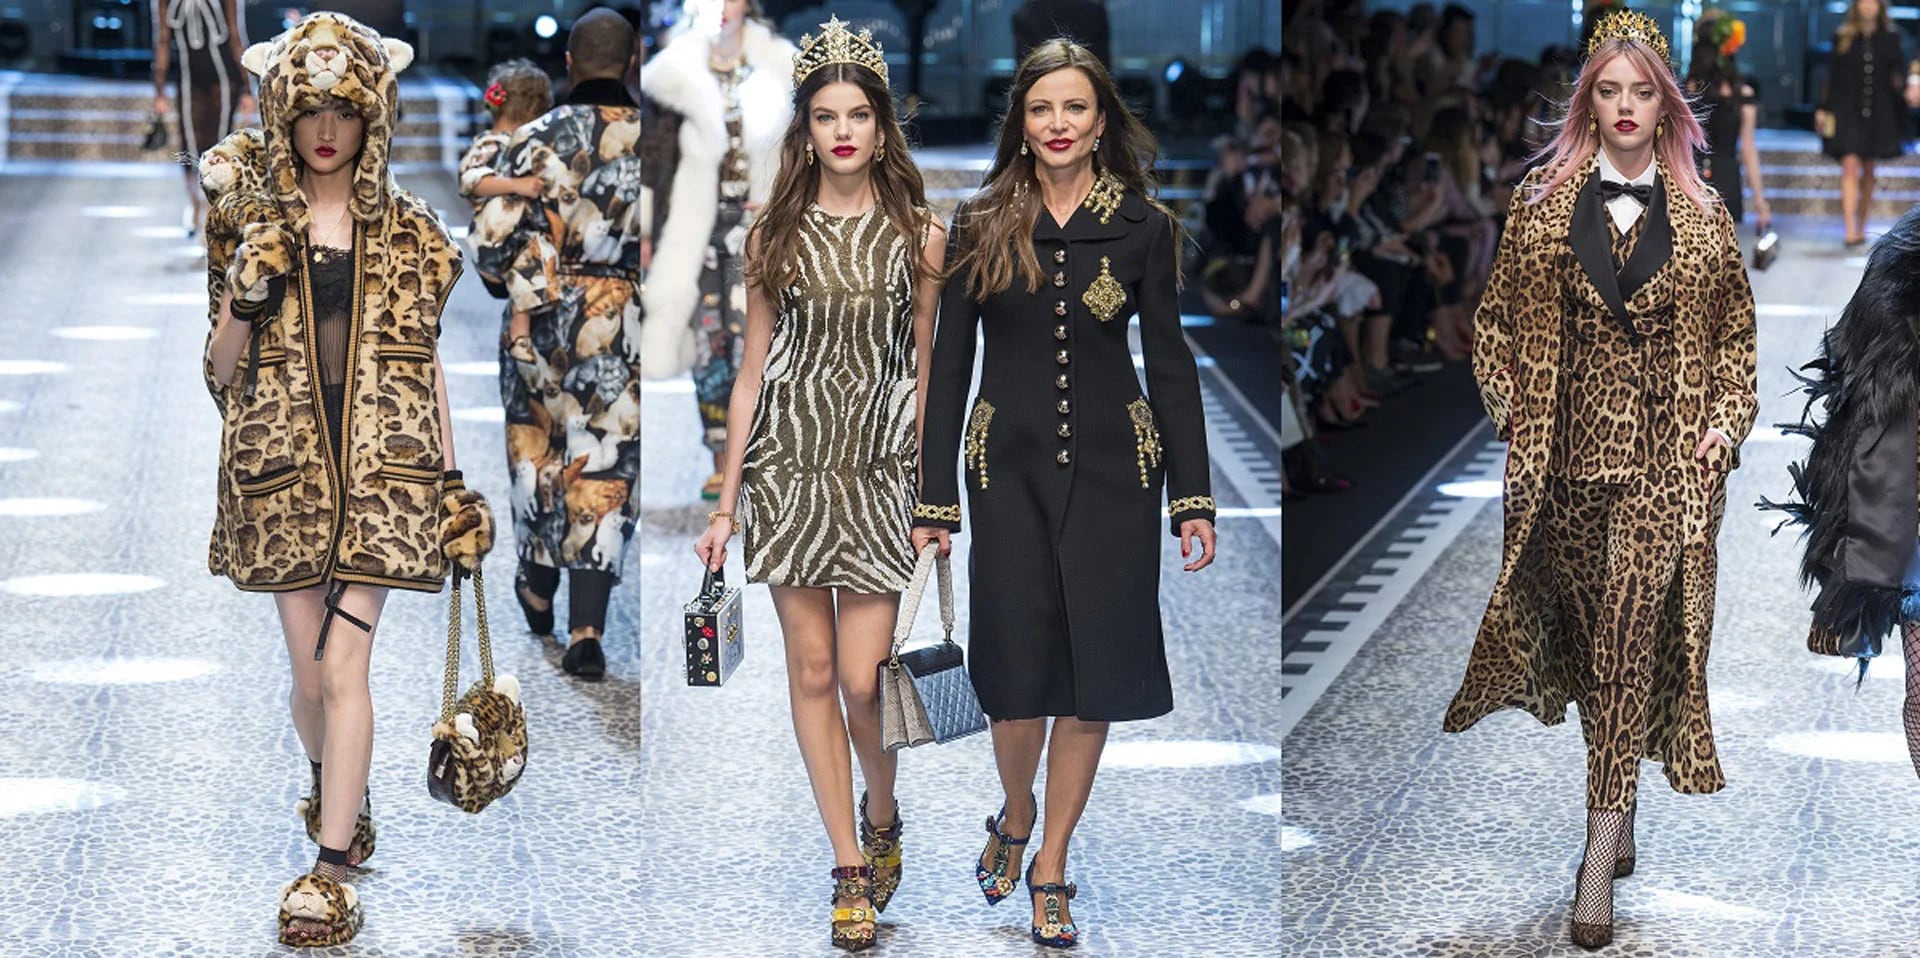 Último desfile de Dolce & Gabbana en Milán. Colección entera de animal print, icónico de la firma.